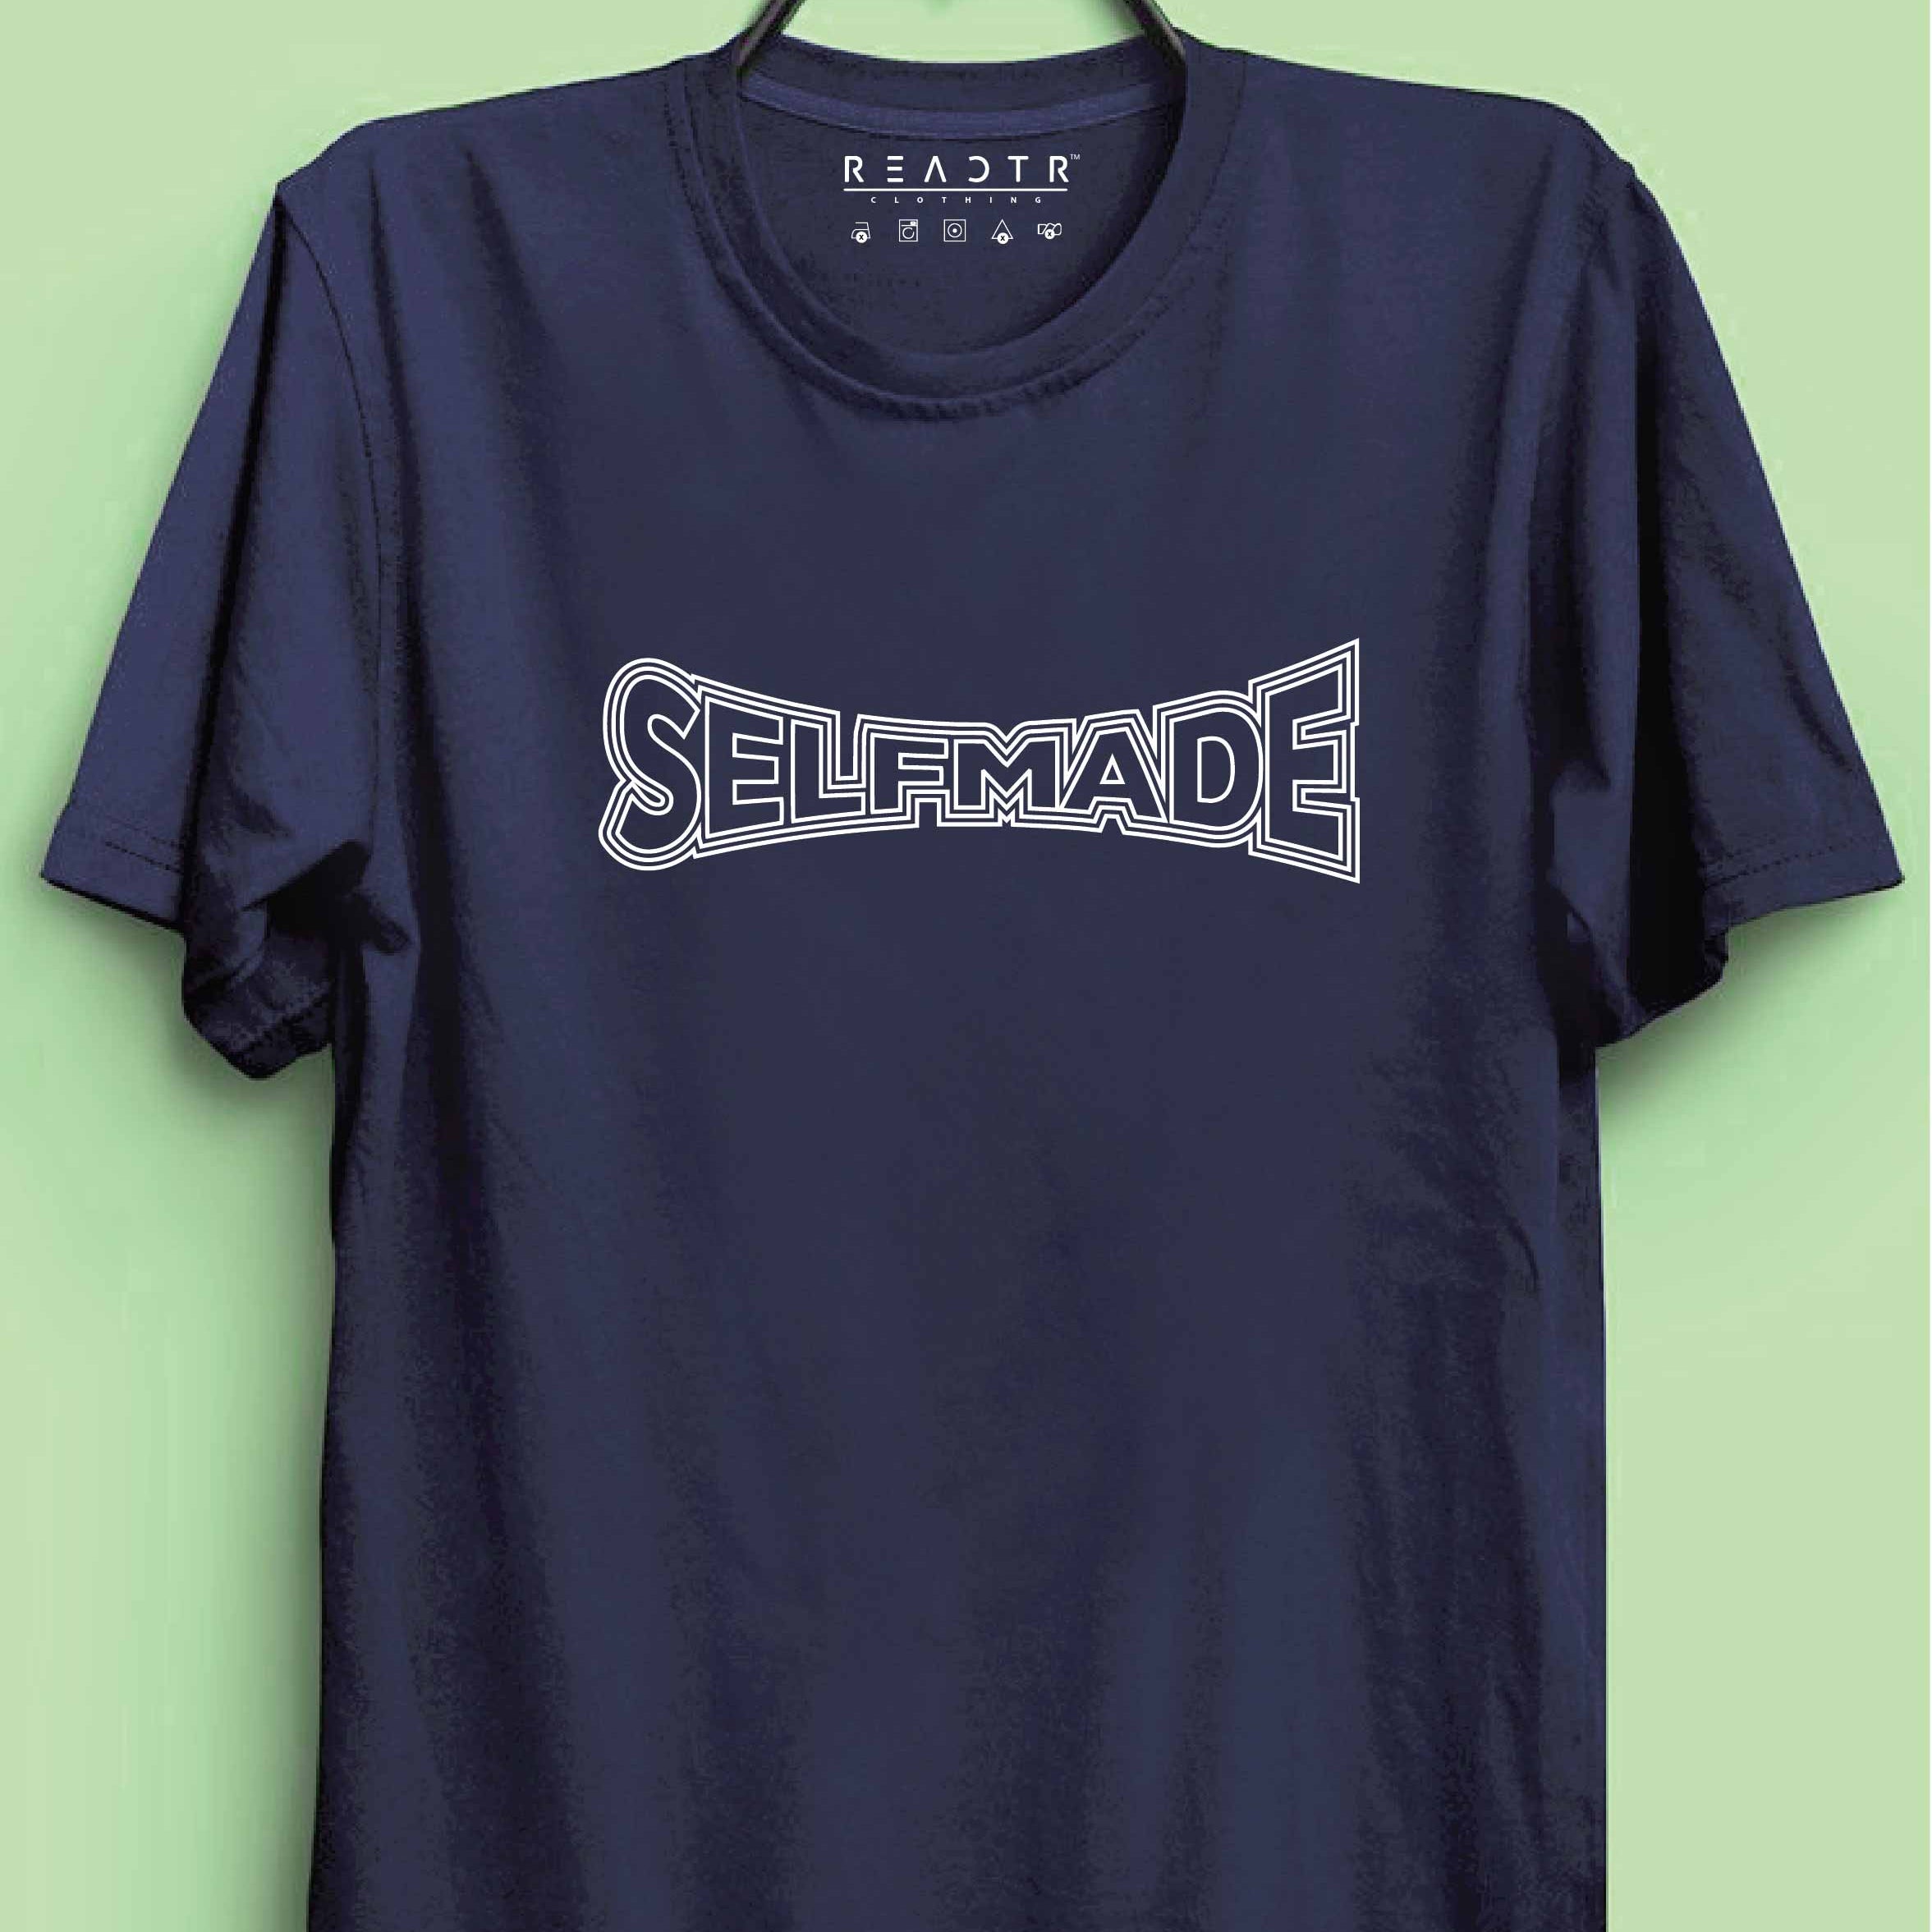 Selfmade Reactr Tshirts For Men - Eyewearlabs